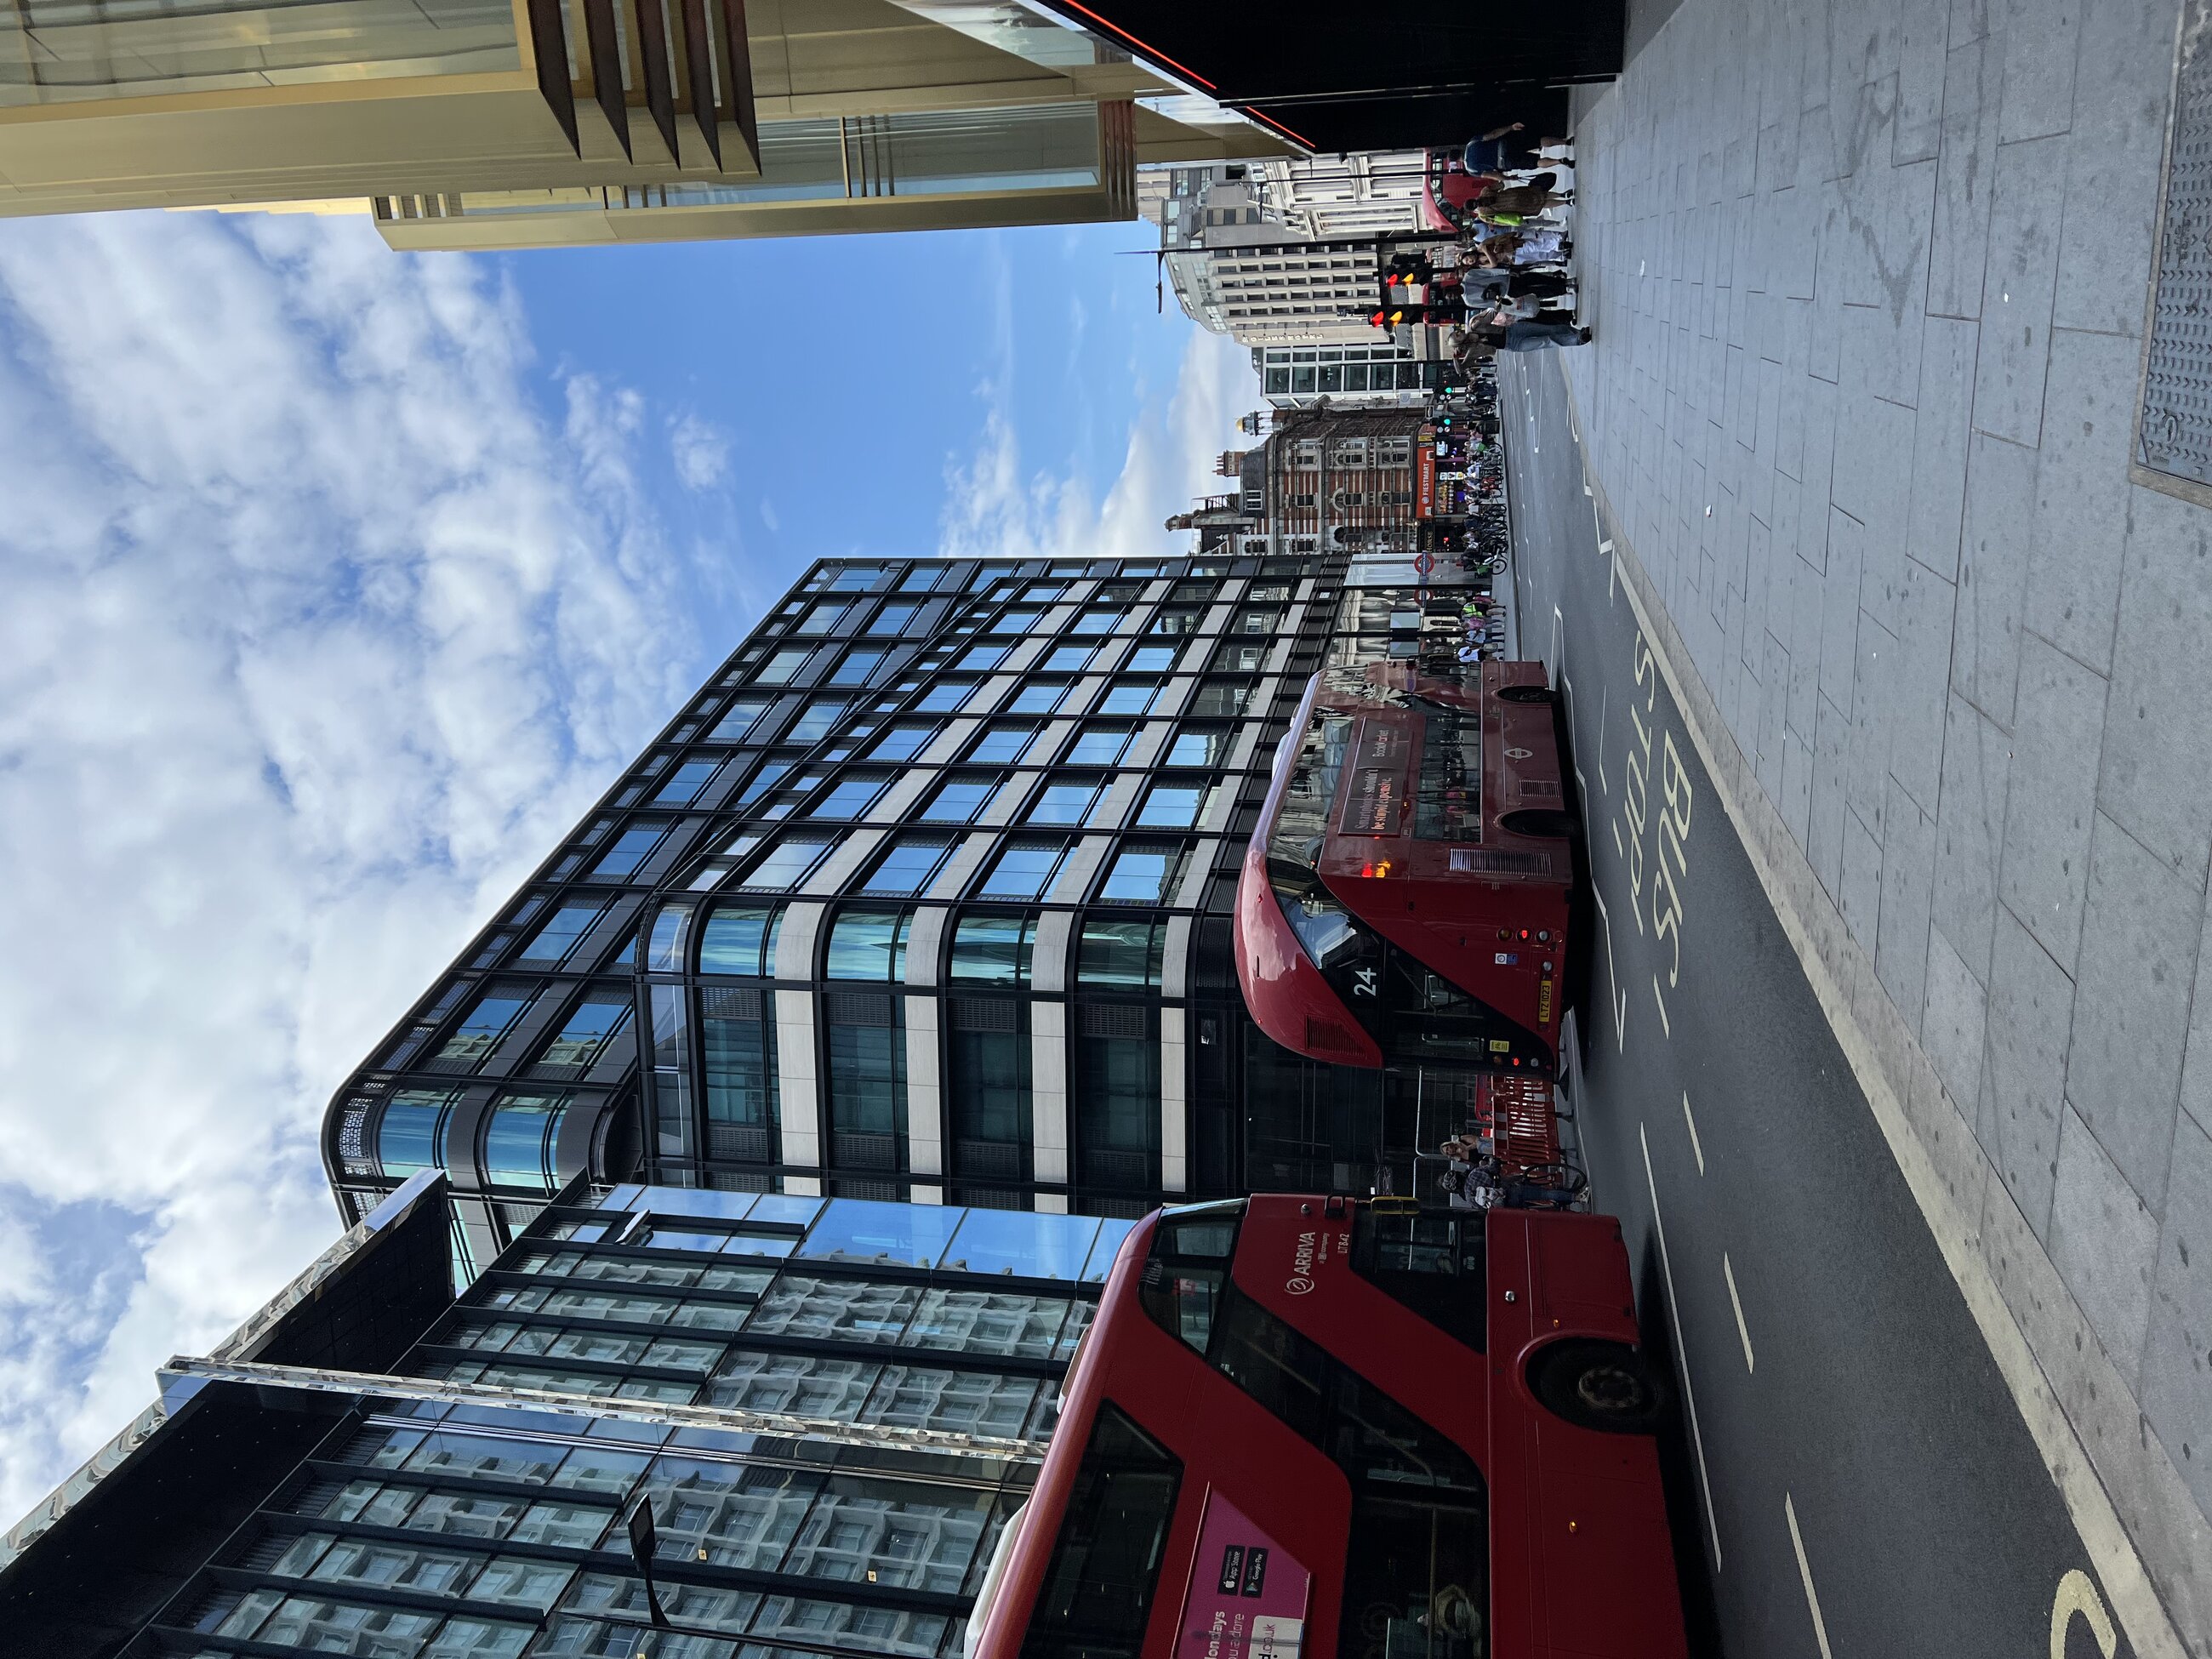 Walk to class in London